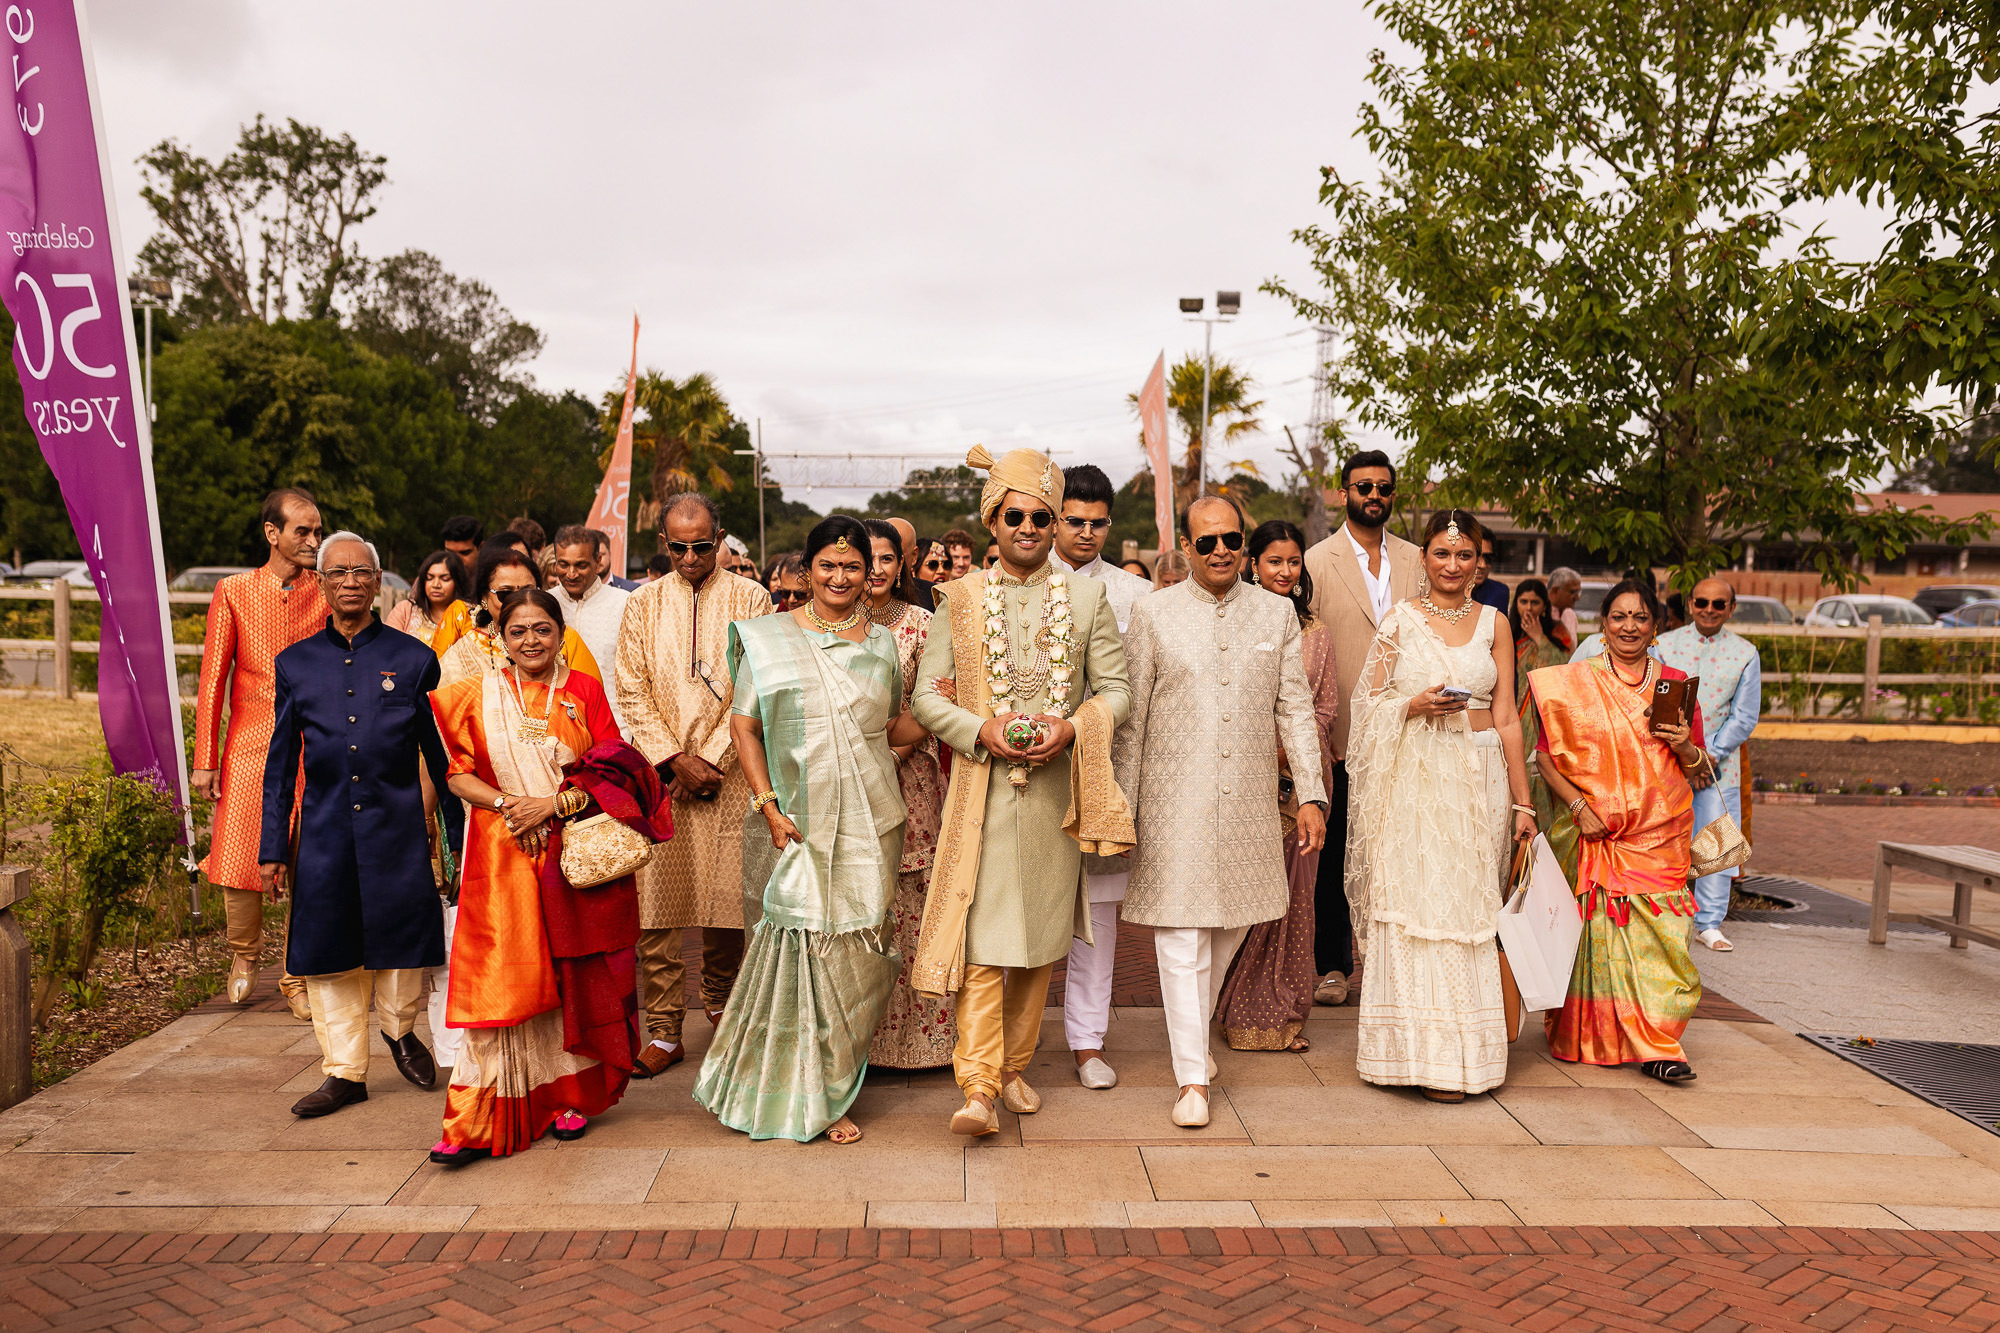 Bhaktivedanta Manor, Hindu Wedding, Sri Krishna Haveli, Watford, London, grooms arrival